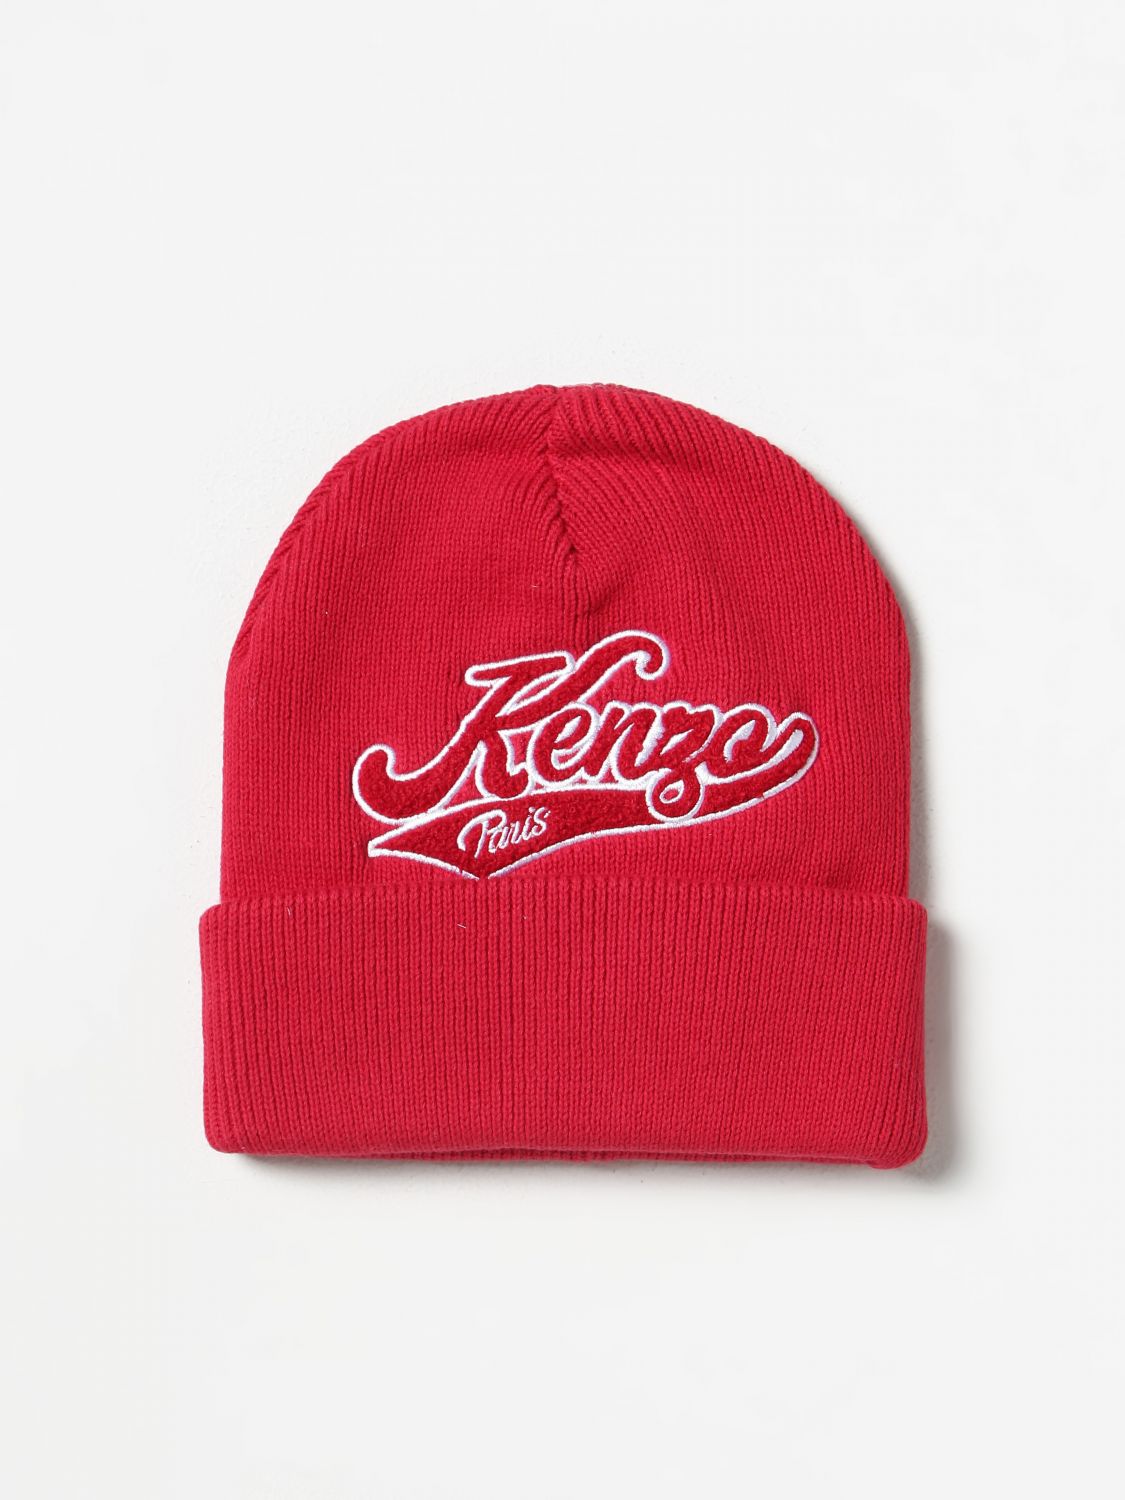 Shop Kenzo Girls' Hats  Kids Kids Color Red